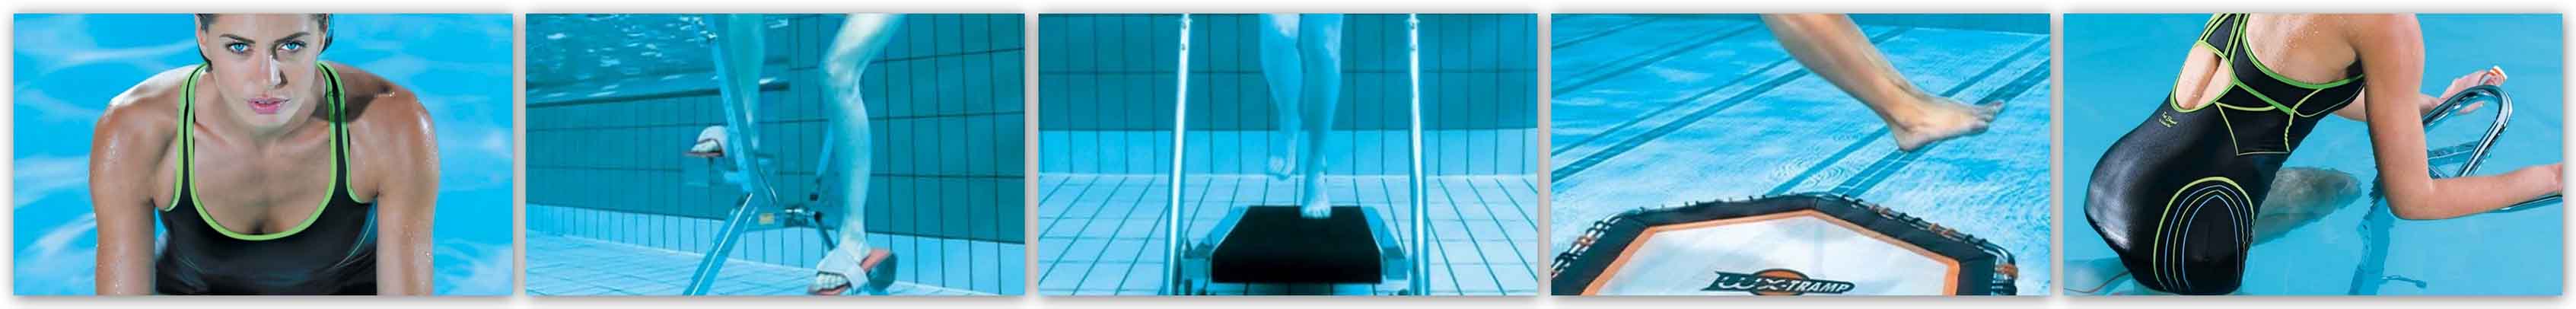 waterflex-aquabike-trampoline-piscine-sport-1